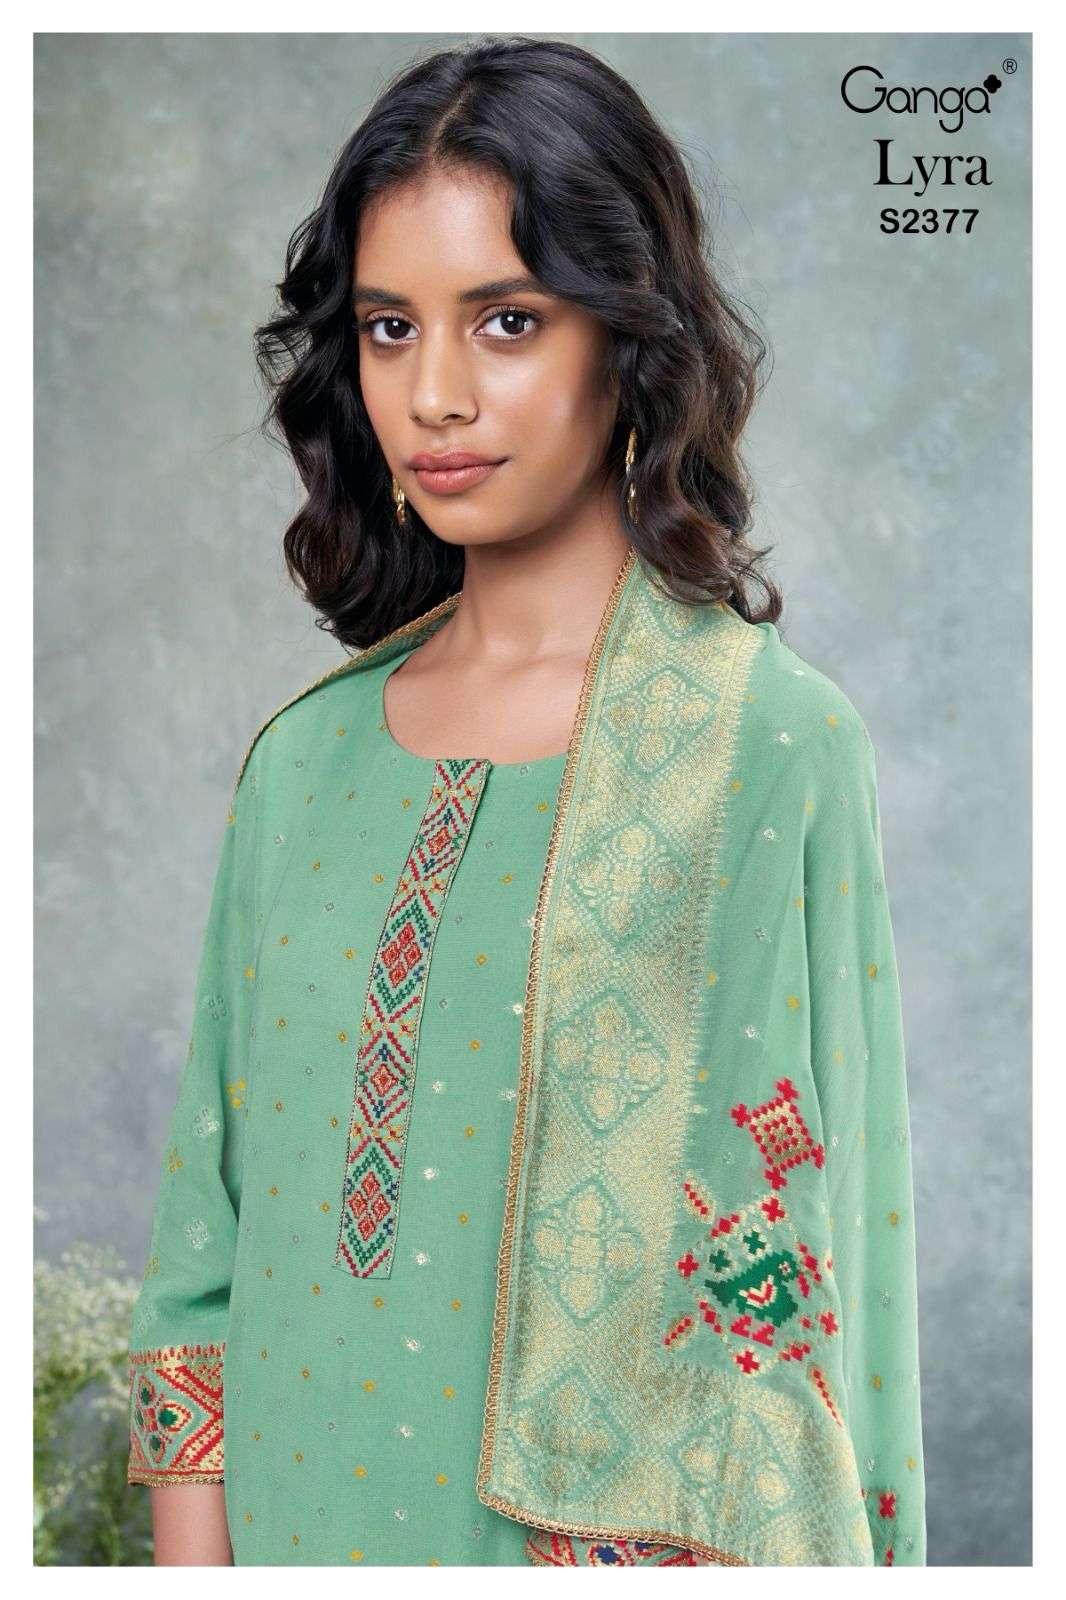 Ganga Lyra 2377 Designer Jacquard Branded Dress Exporters